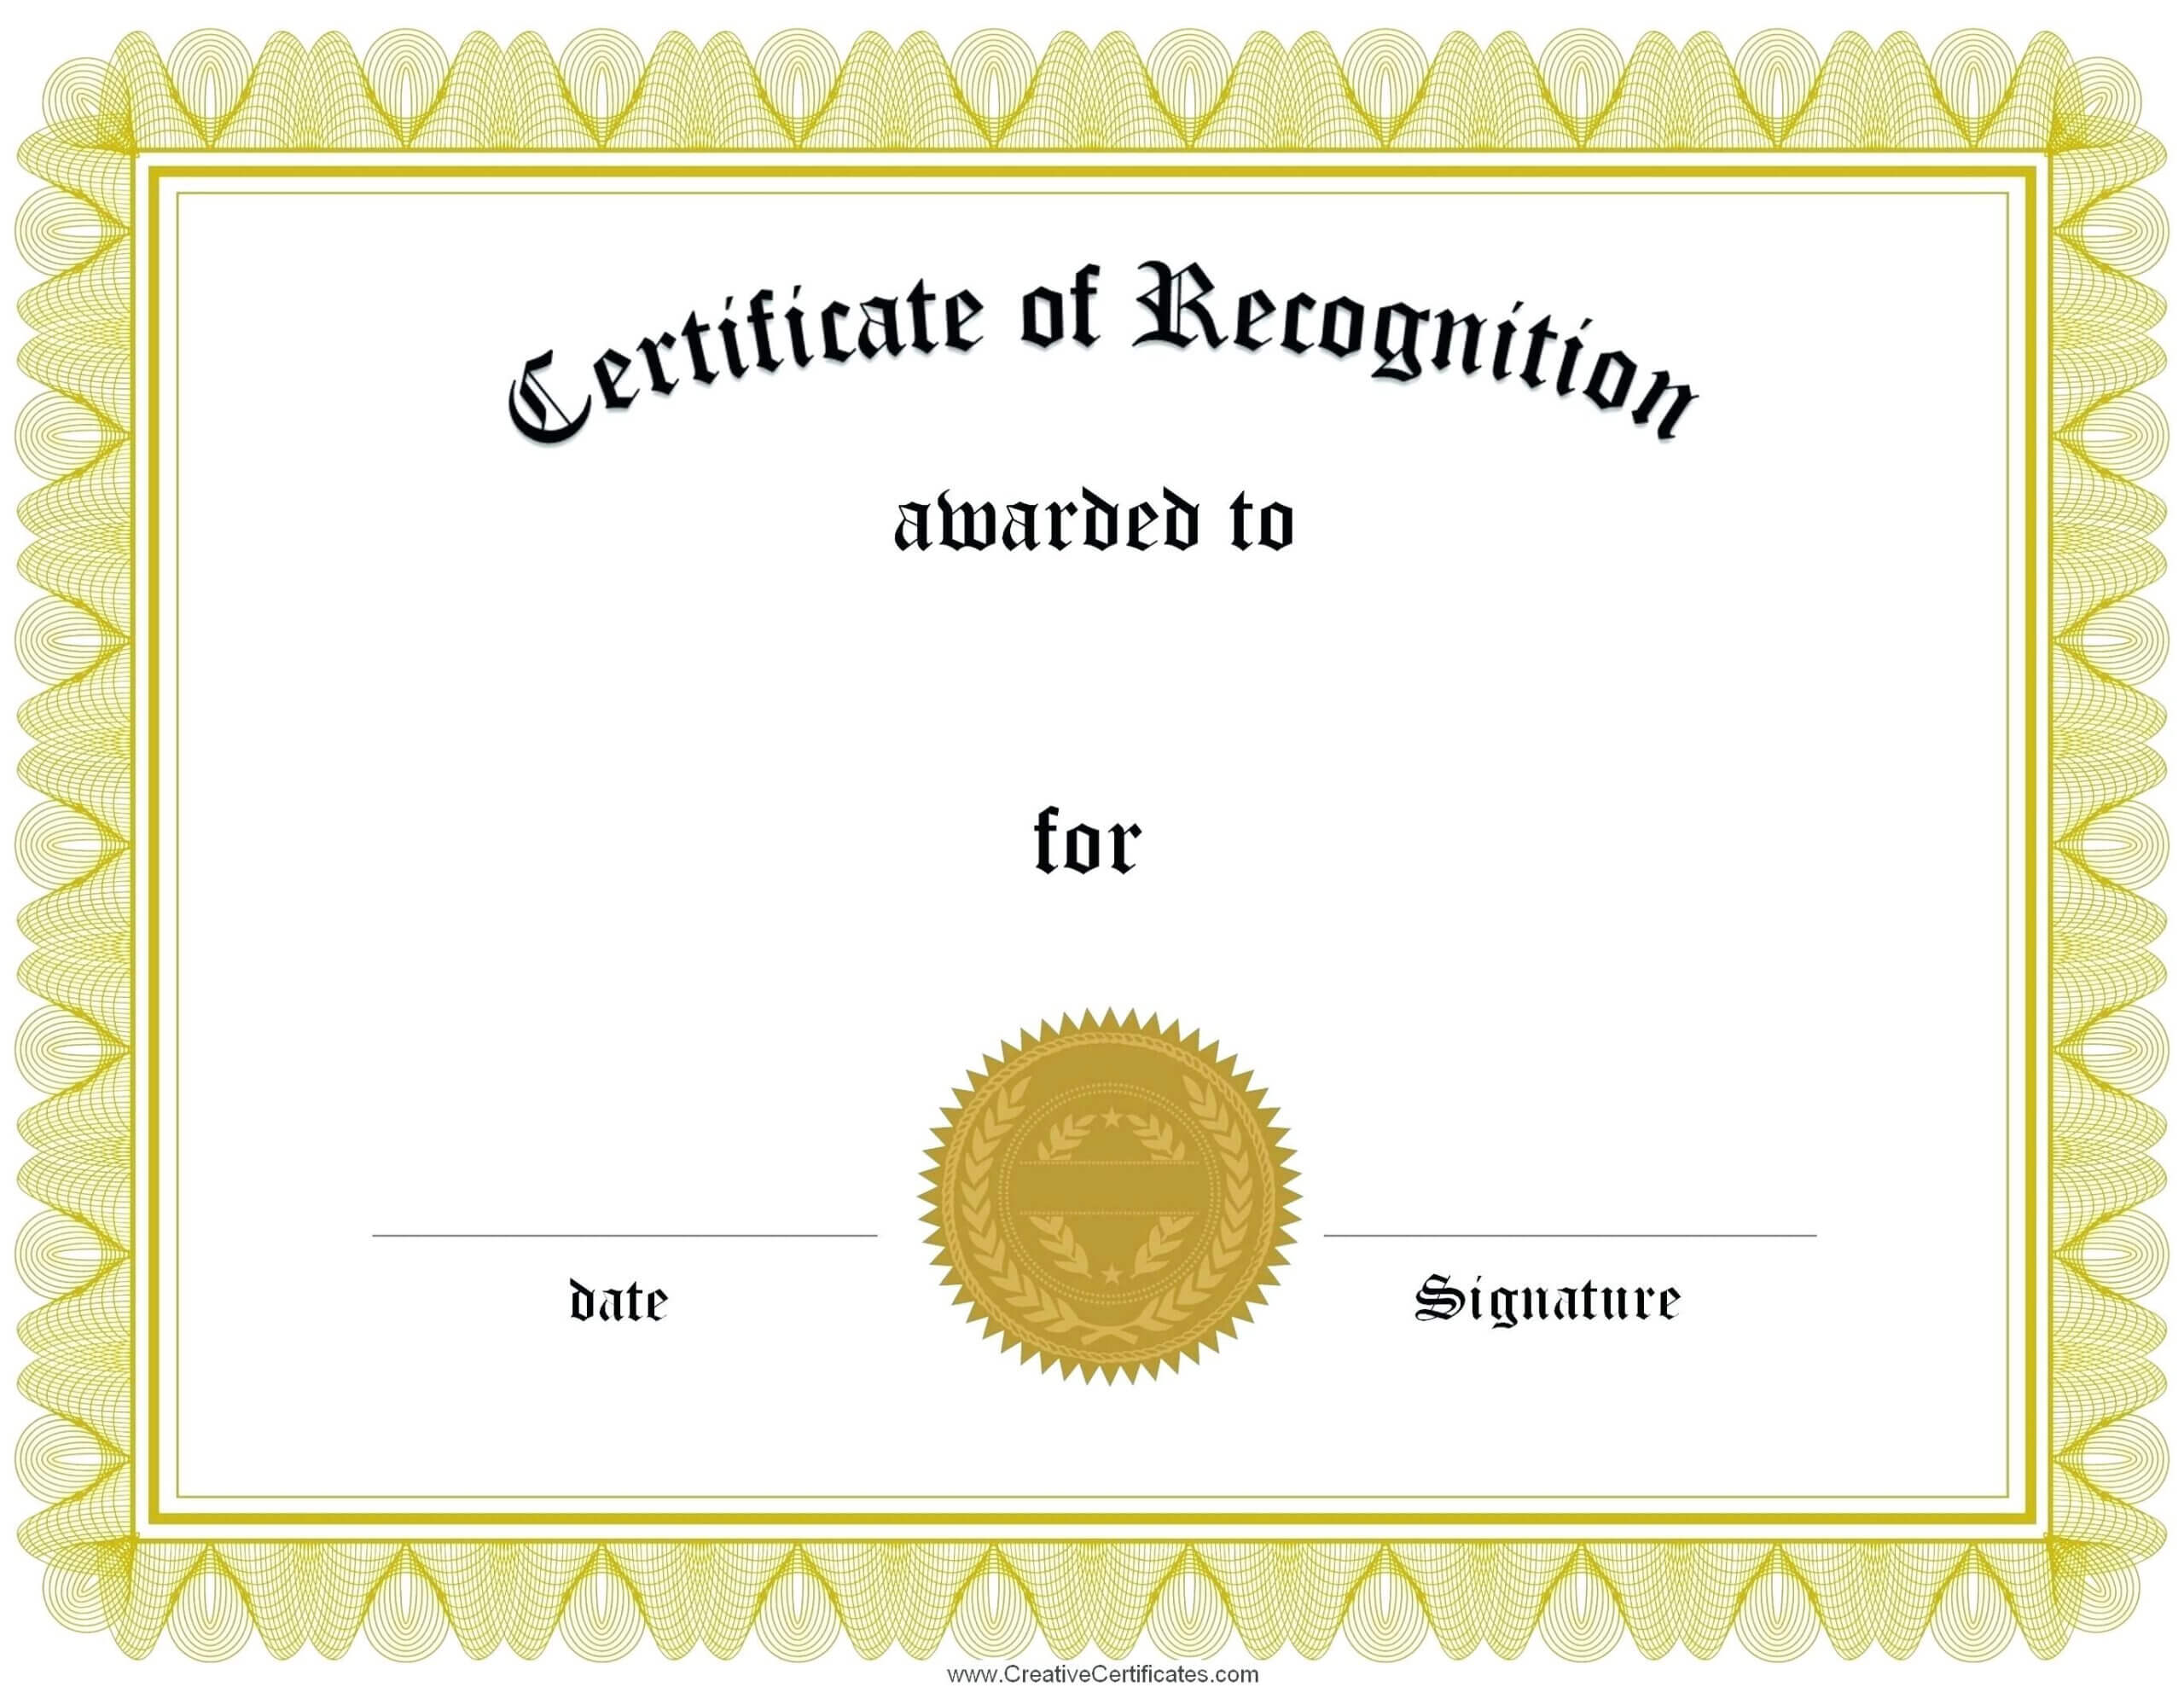 Appreciation Award Certificate Template Free | Certificate With Regard To Free Printable Certificate Of Achievement Template